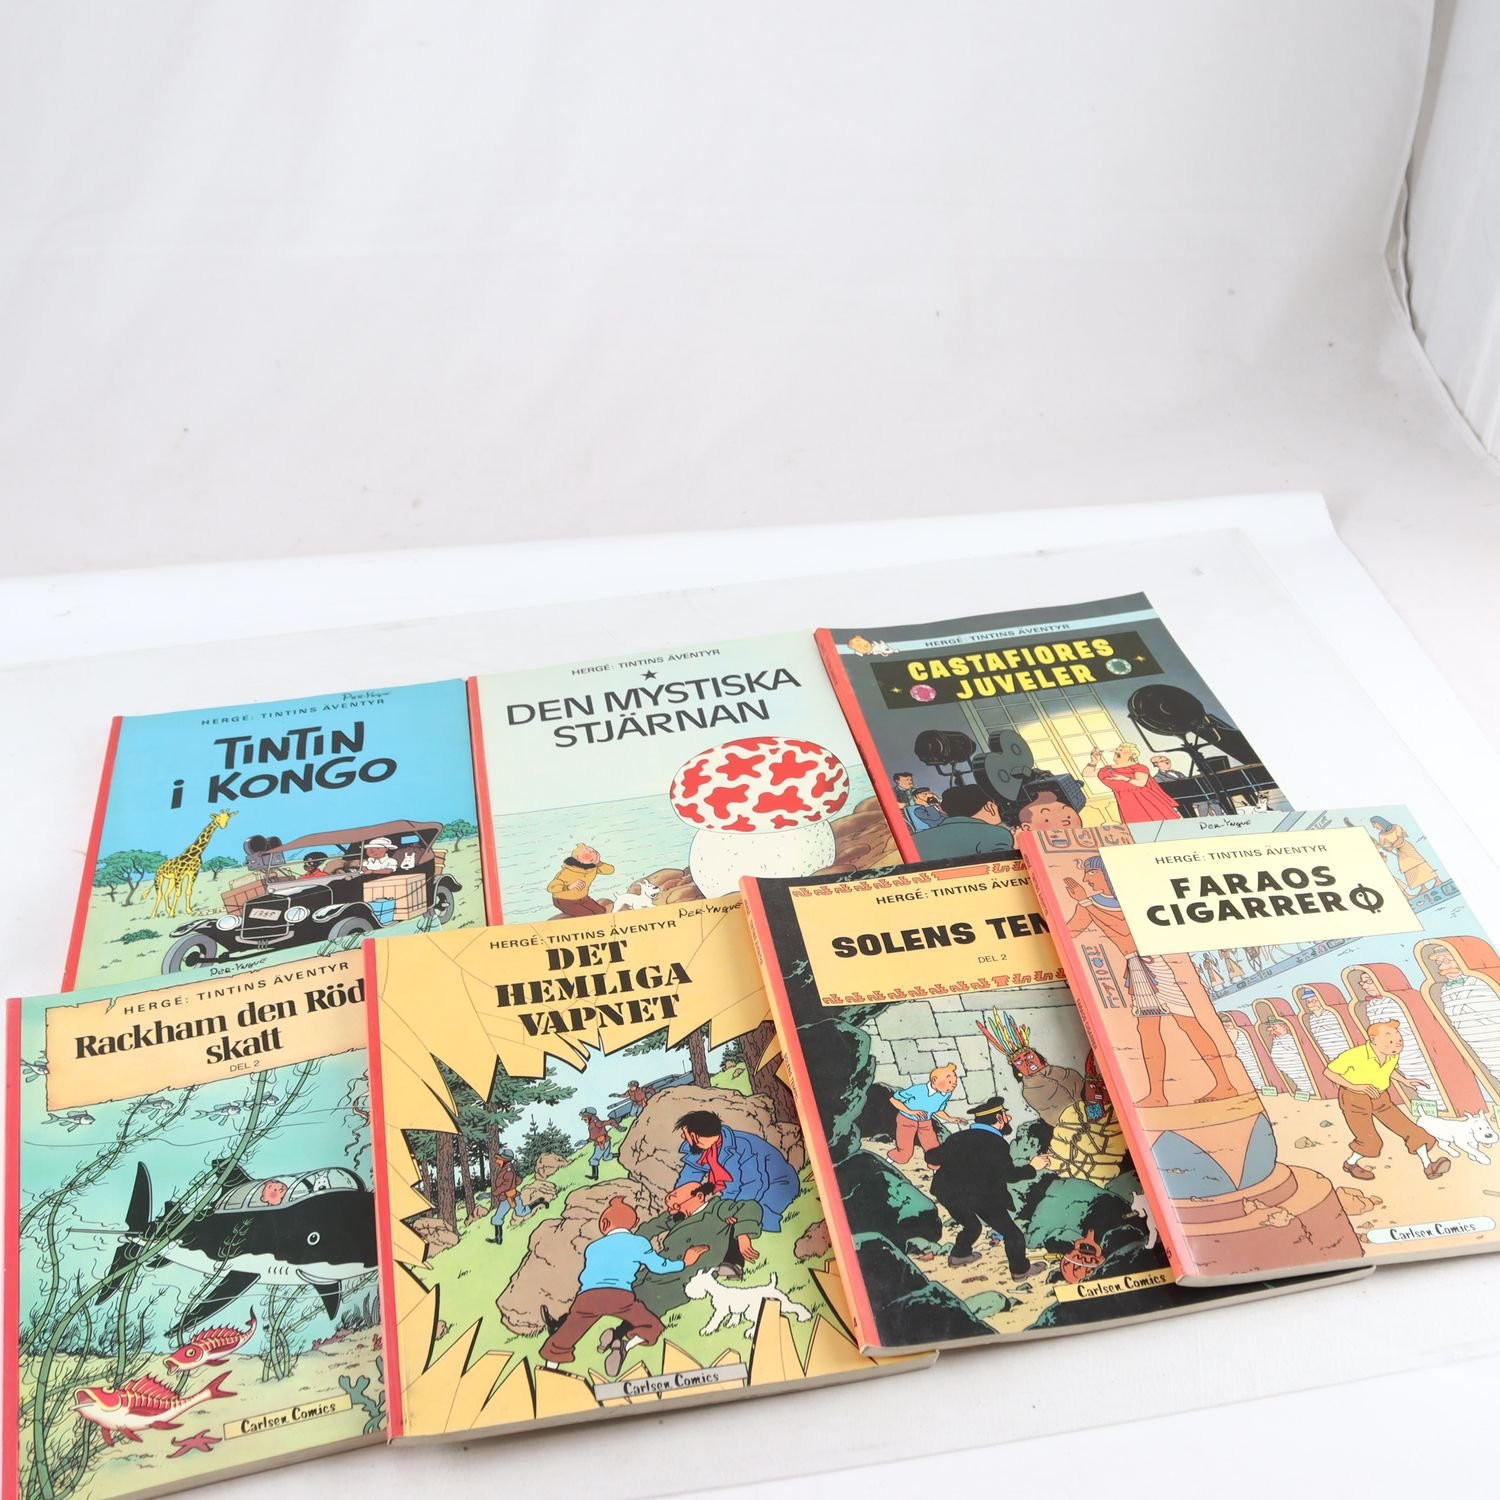 Hergé, Tintins äventyr, 7 album utgivna på 1970-talet